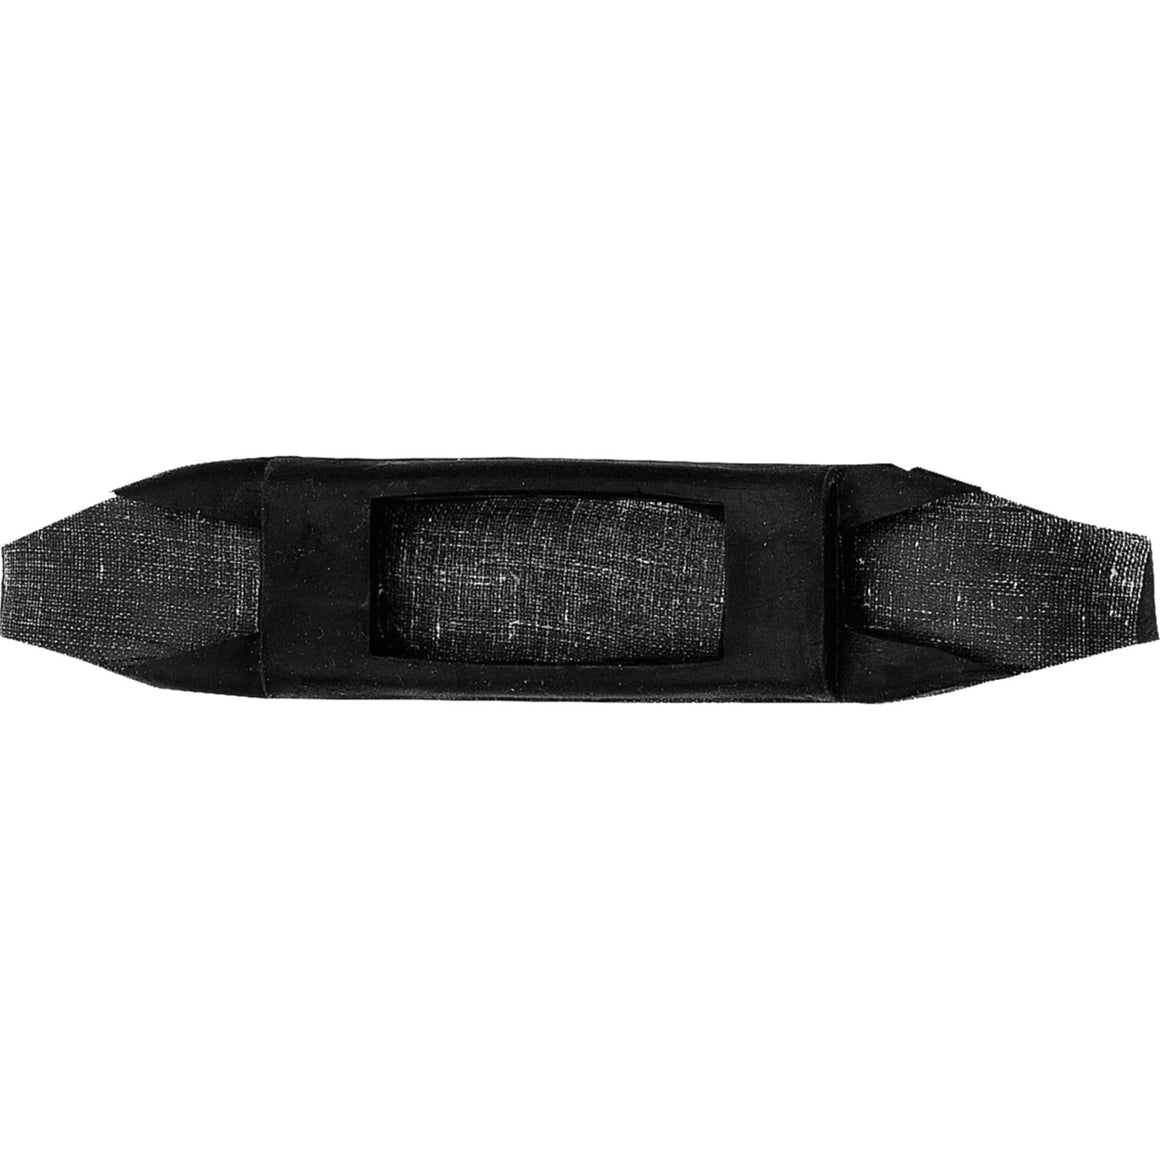 Sprenger Curb chain guard rubber black